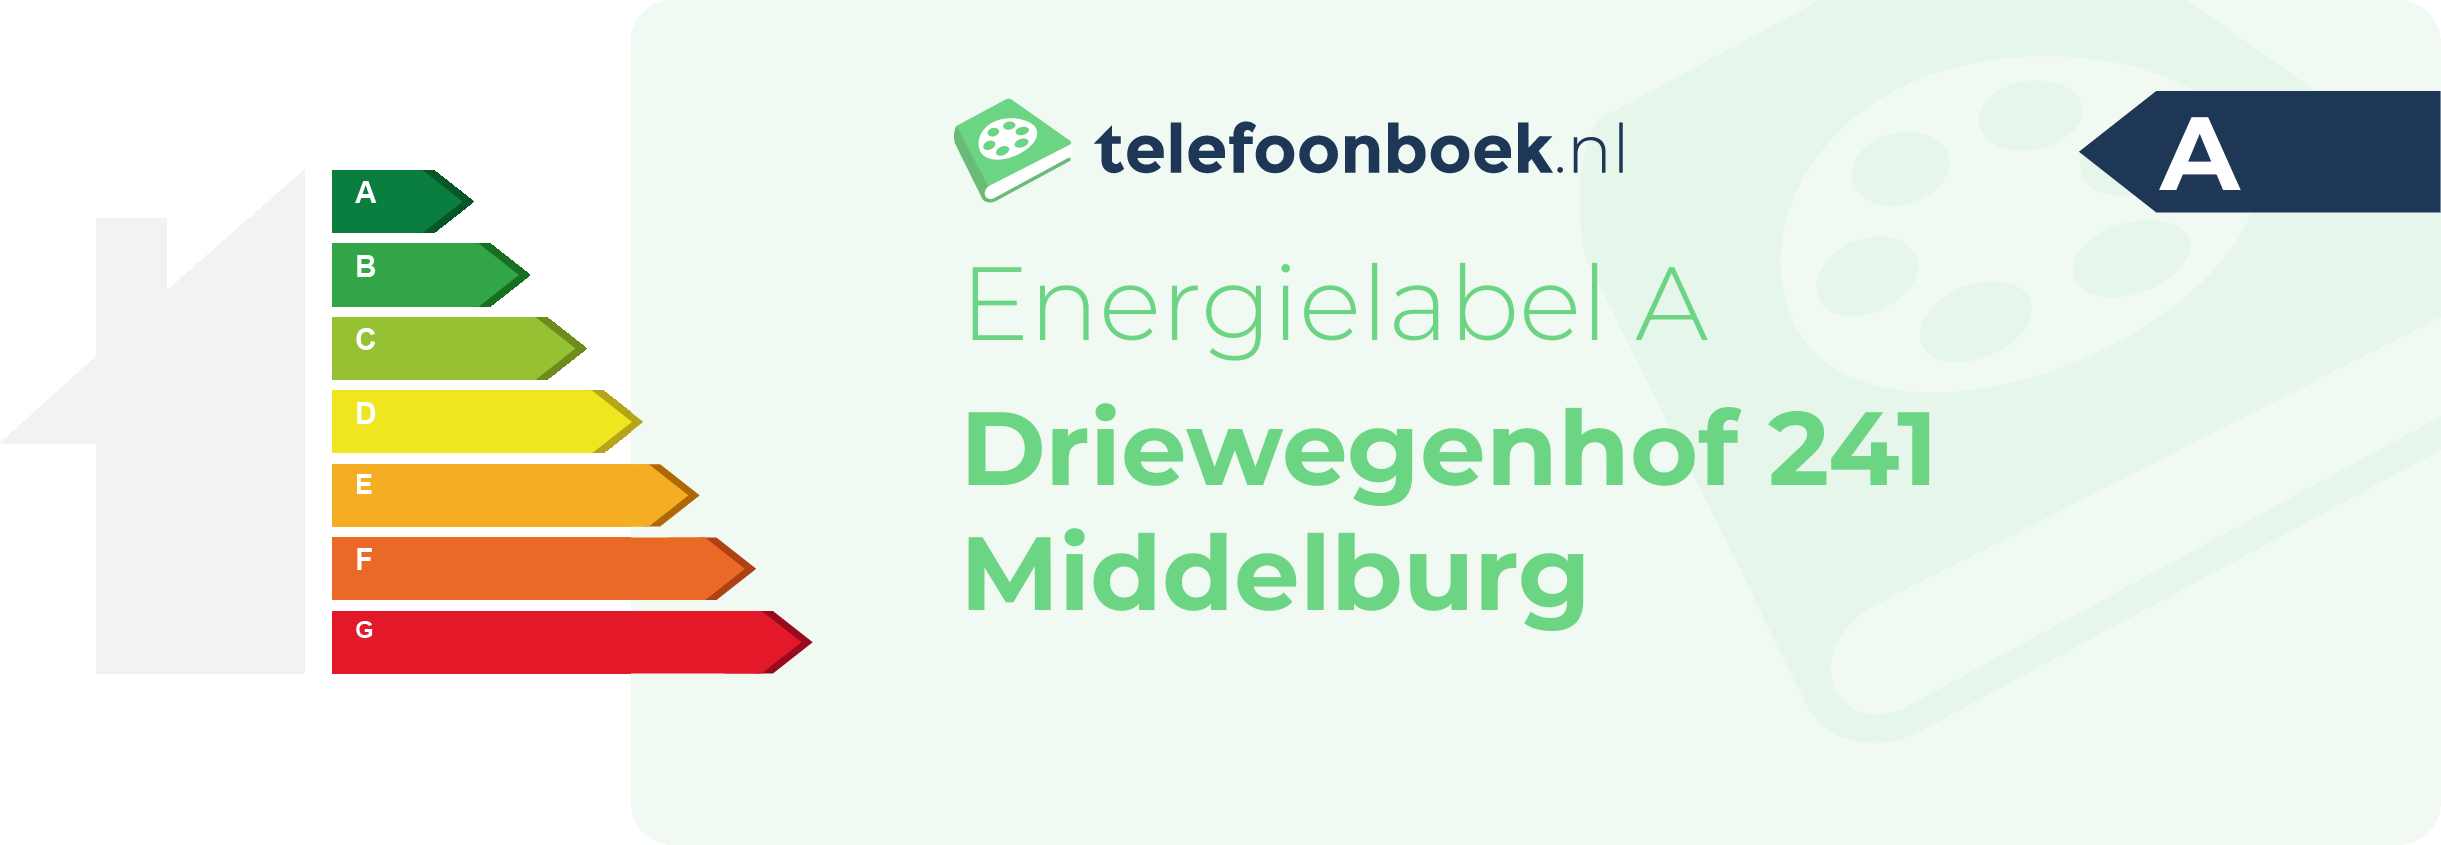 Energielabel Driewegenhof 241 Middelburg